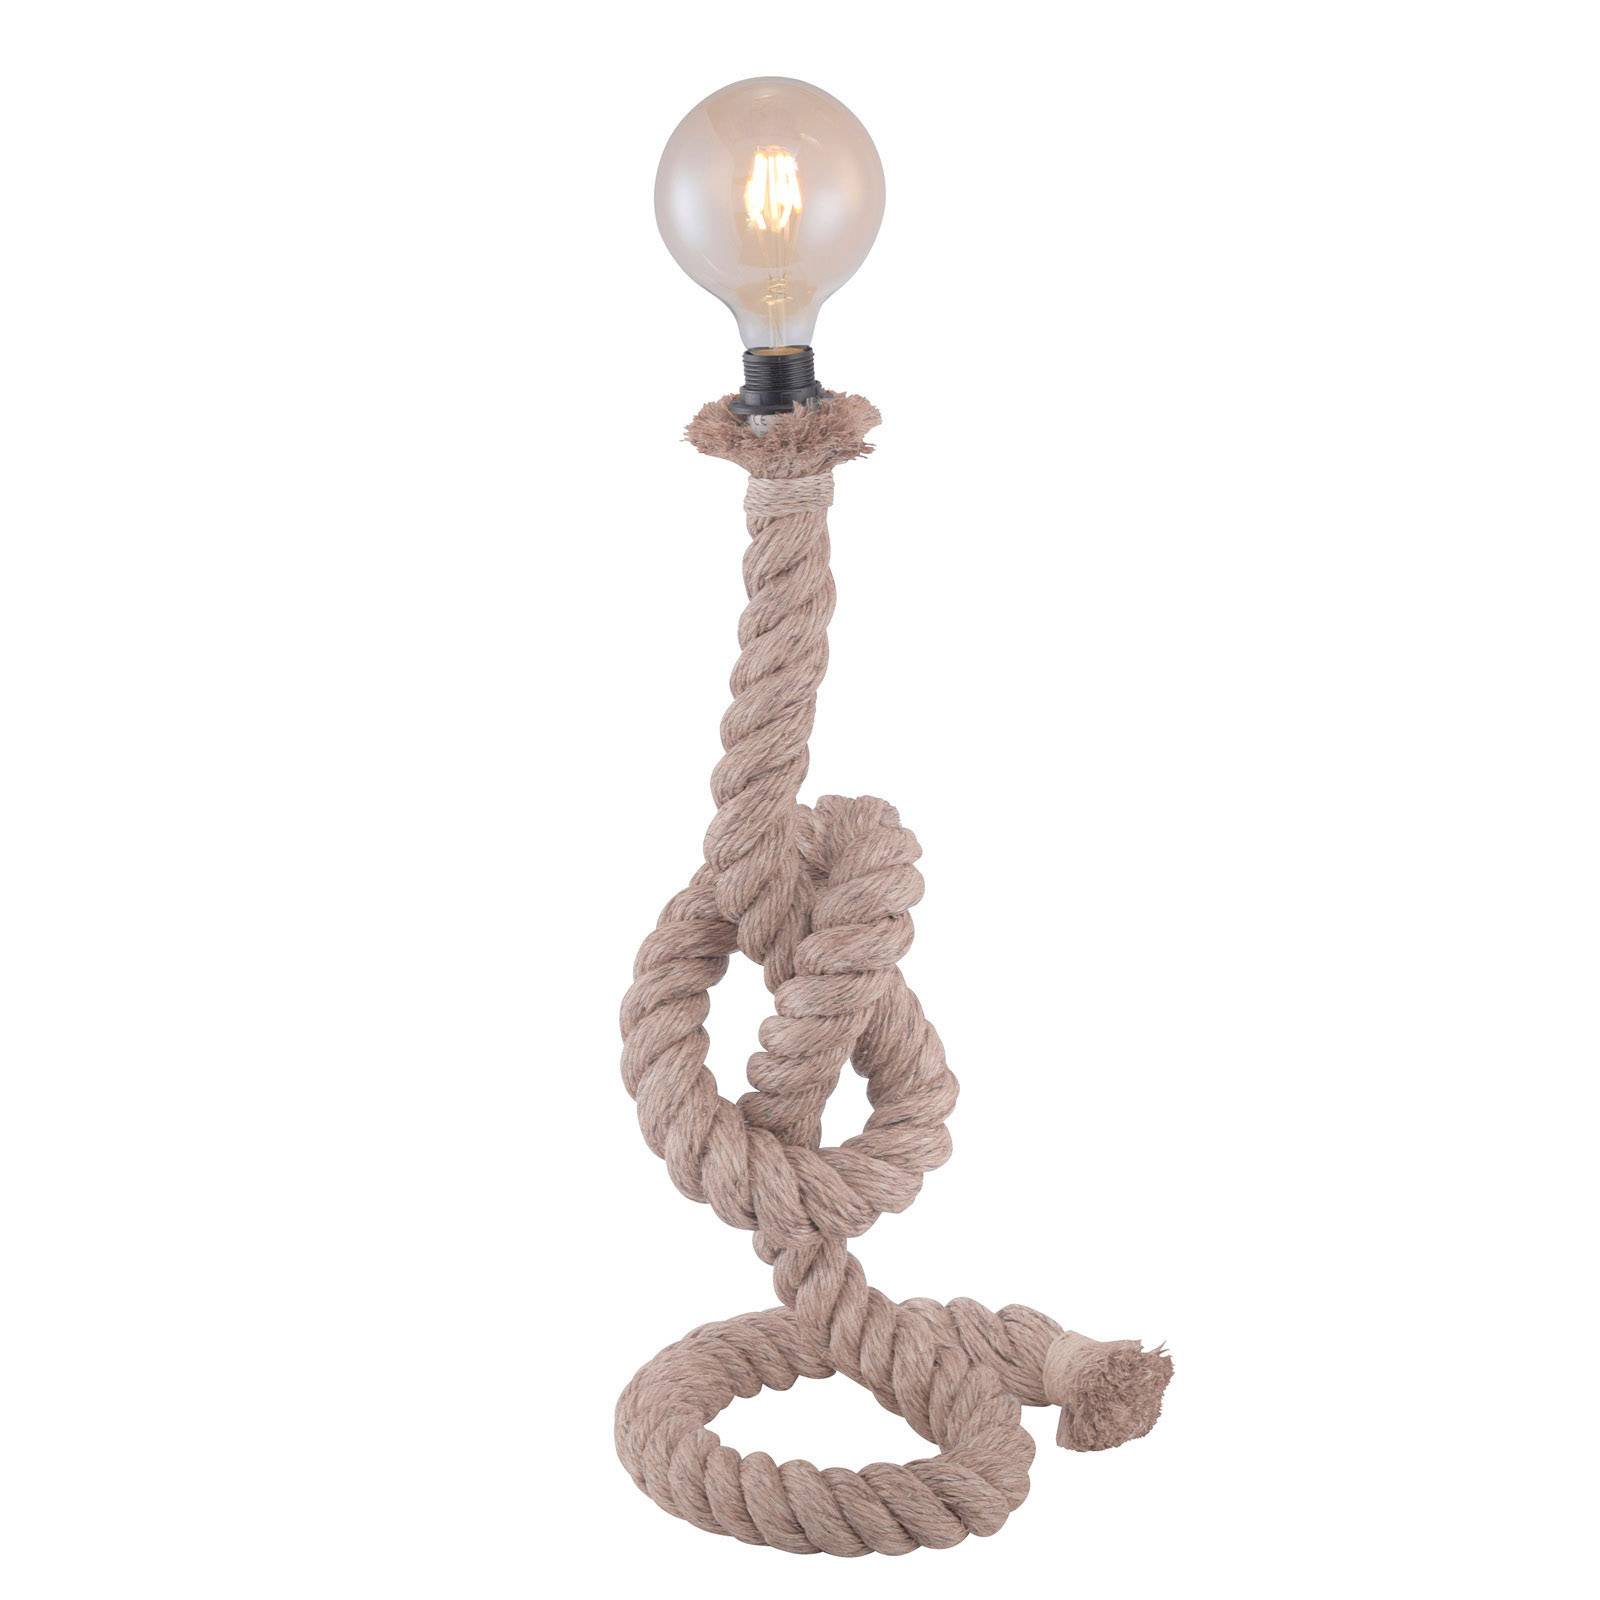 JUST LIGHT. Tischlampe Rope aus dickem Seil